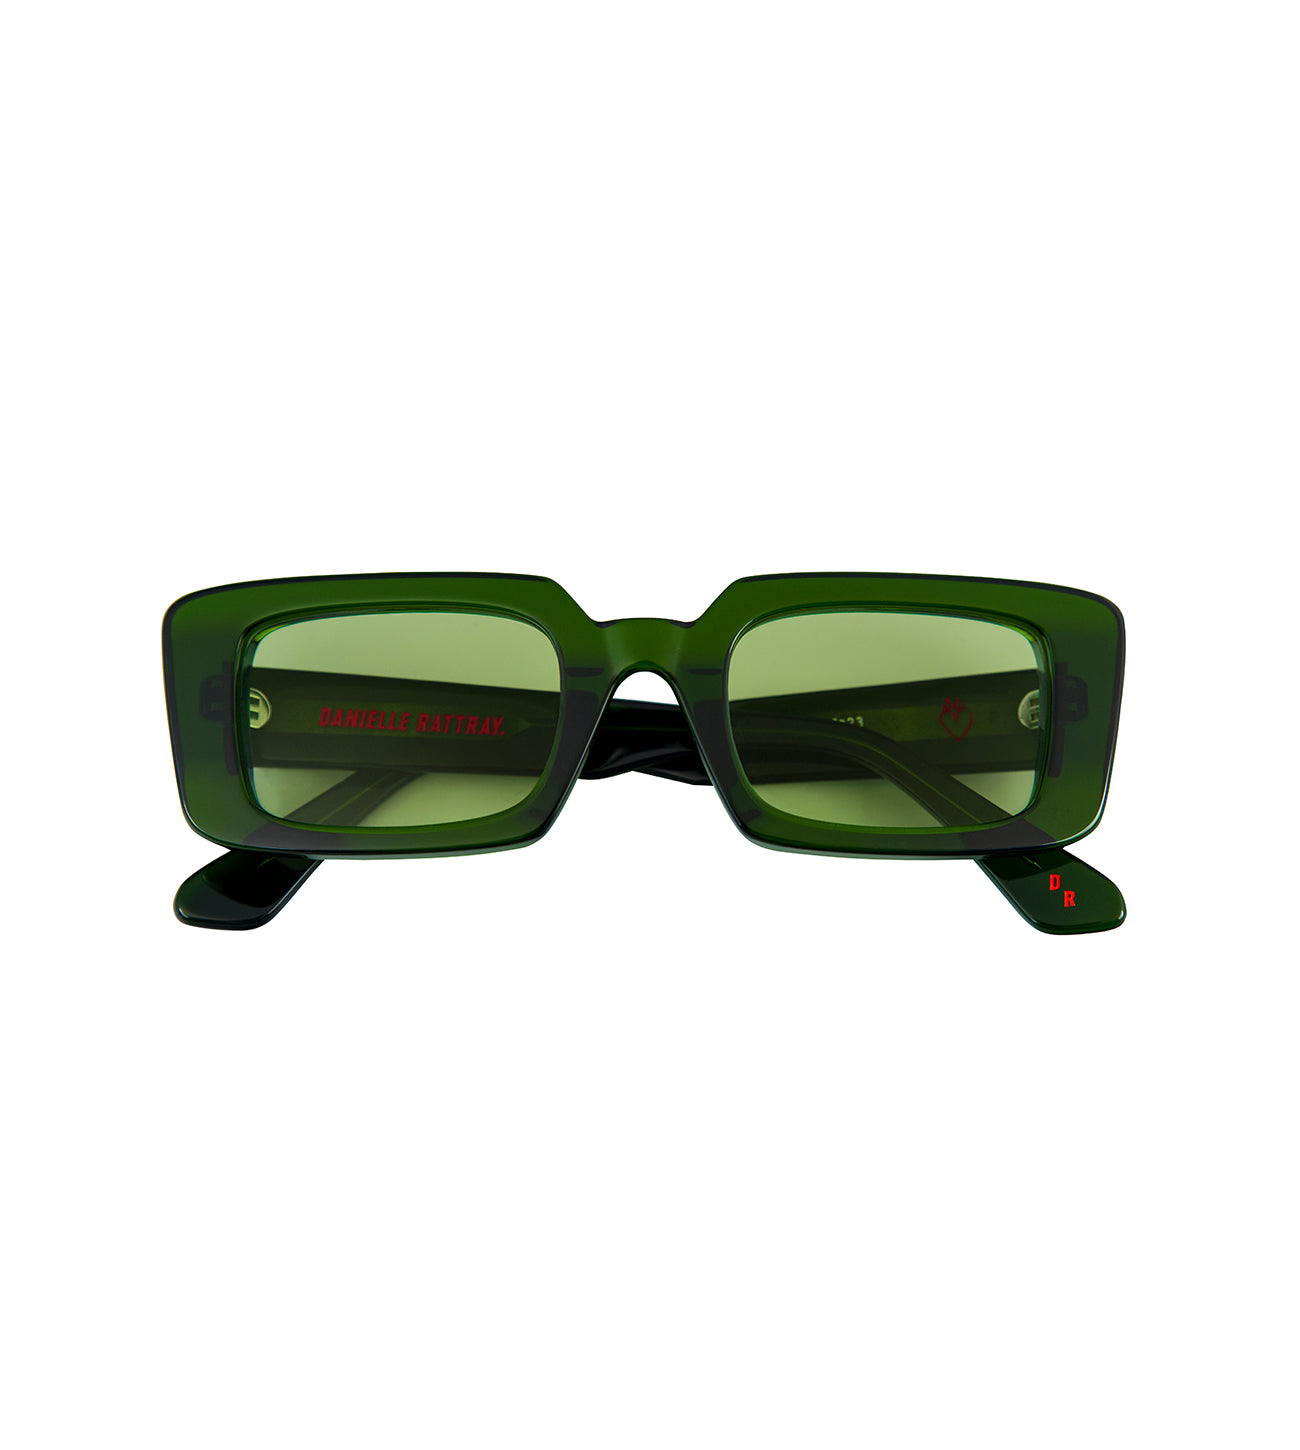 Nola Green Sunglasses by Danielle Rattray 